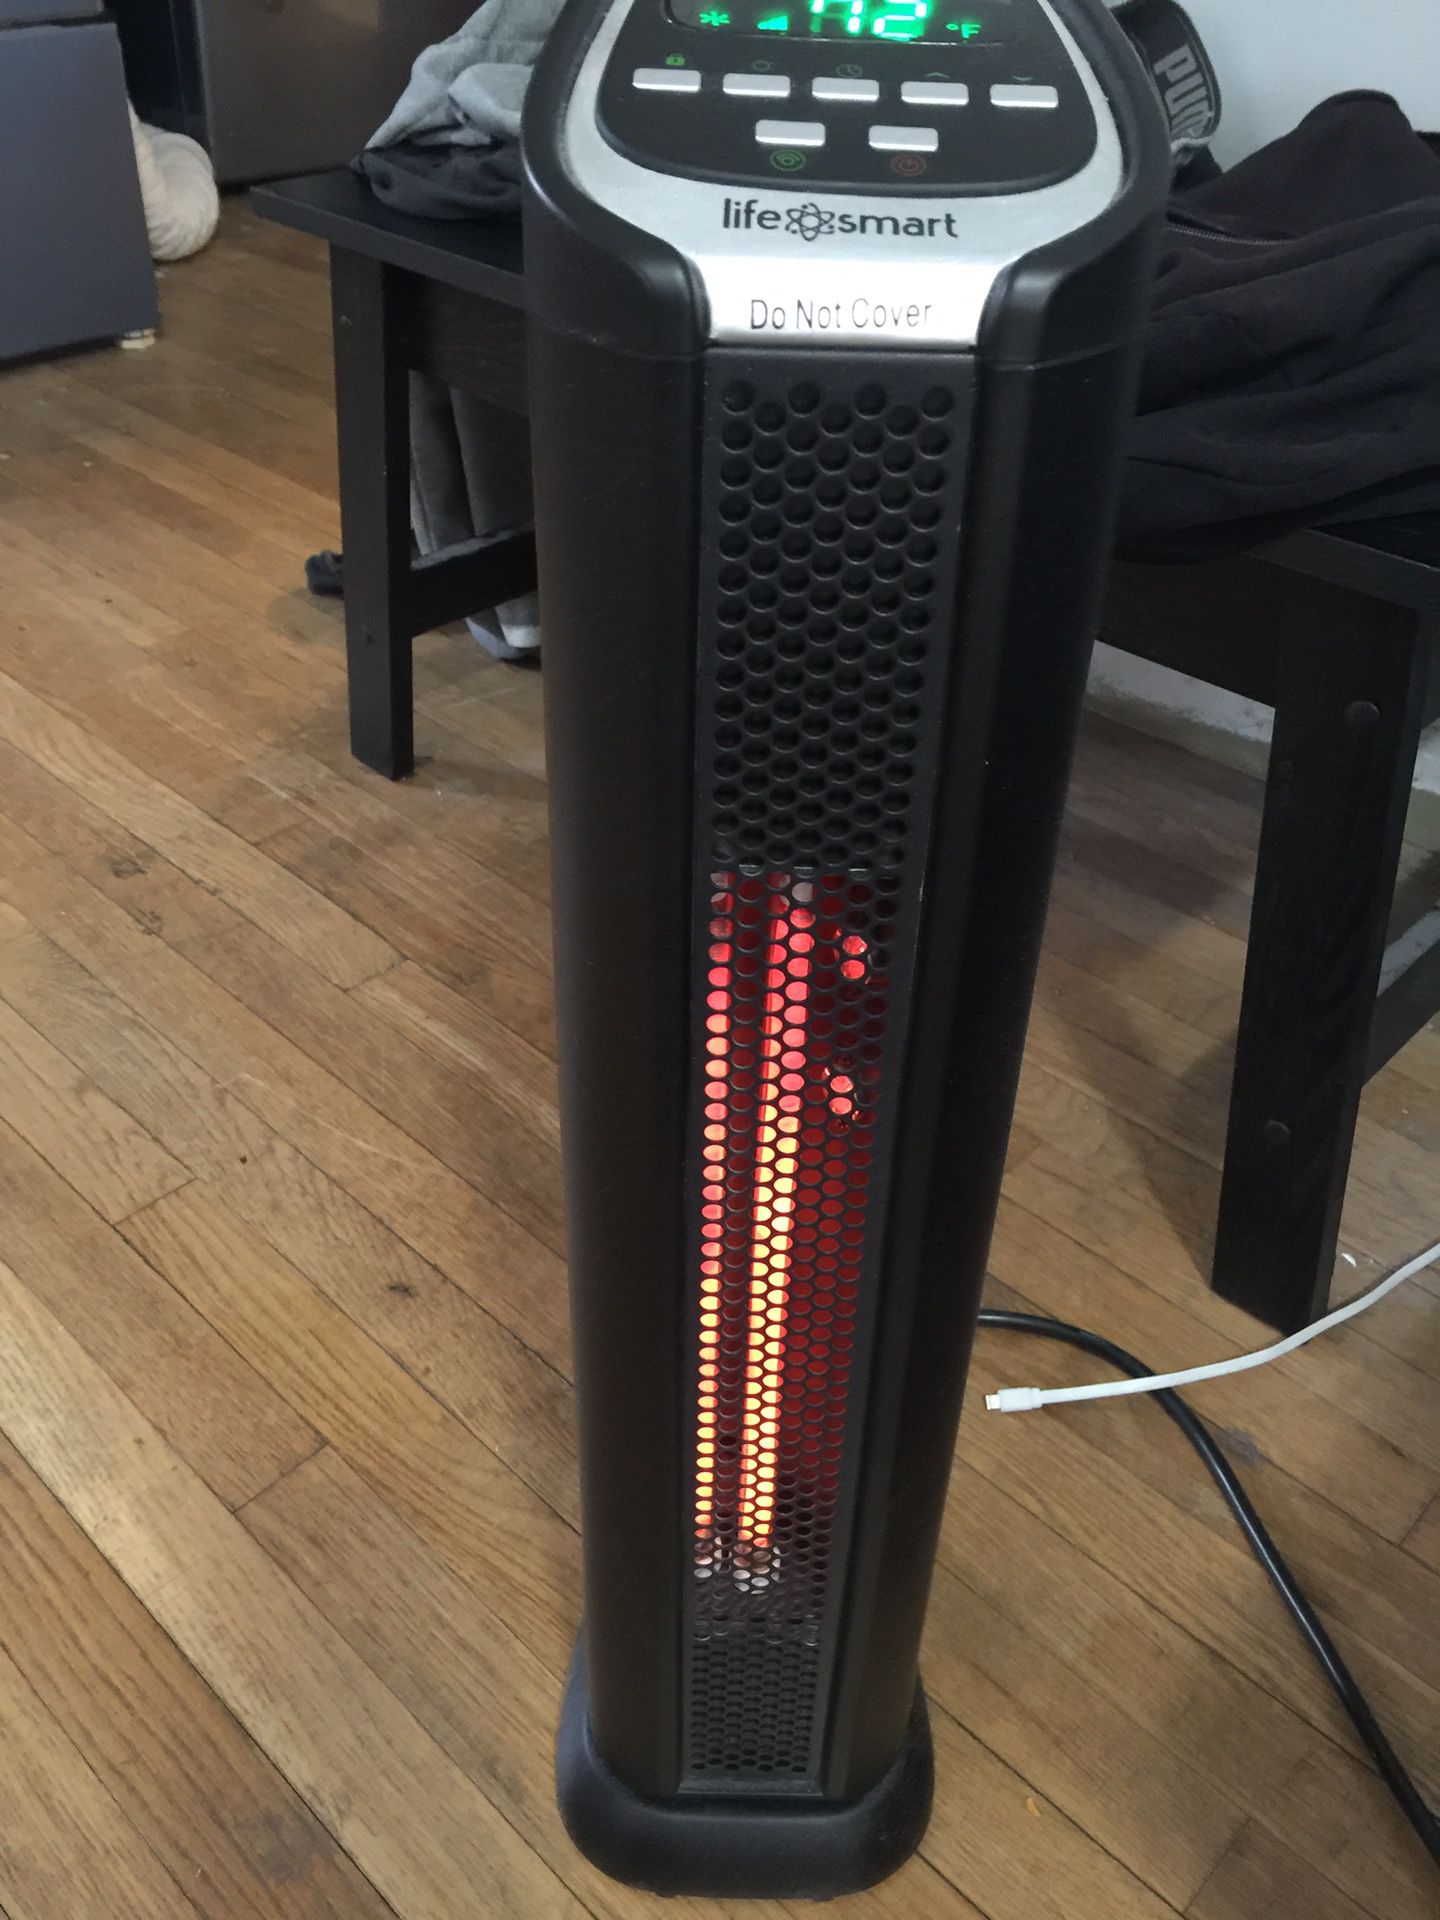 Lifesmart infrared heater